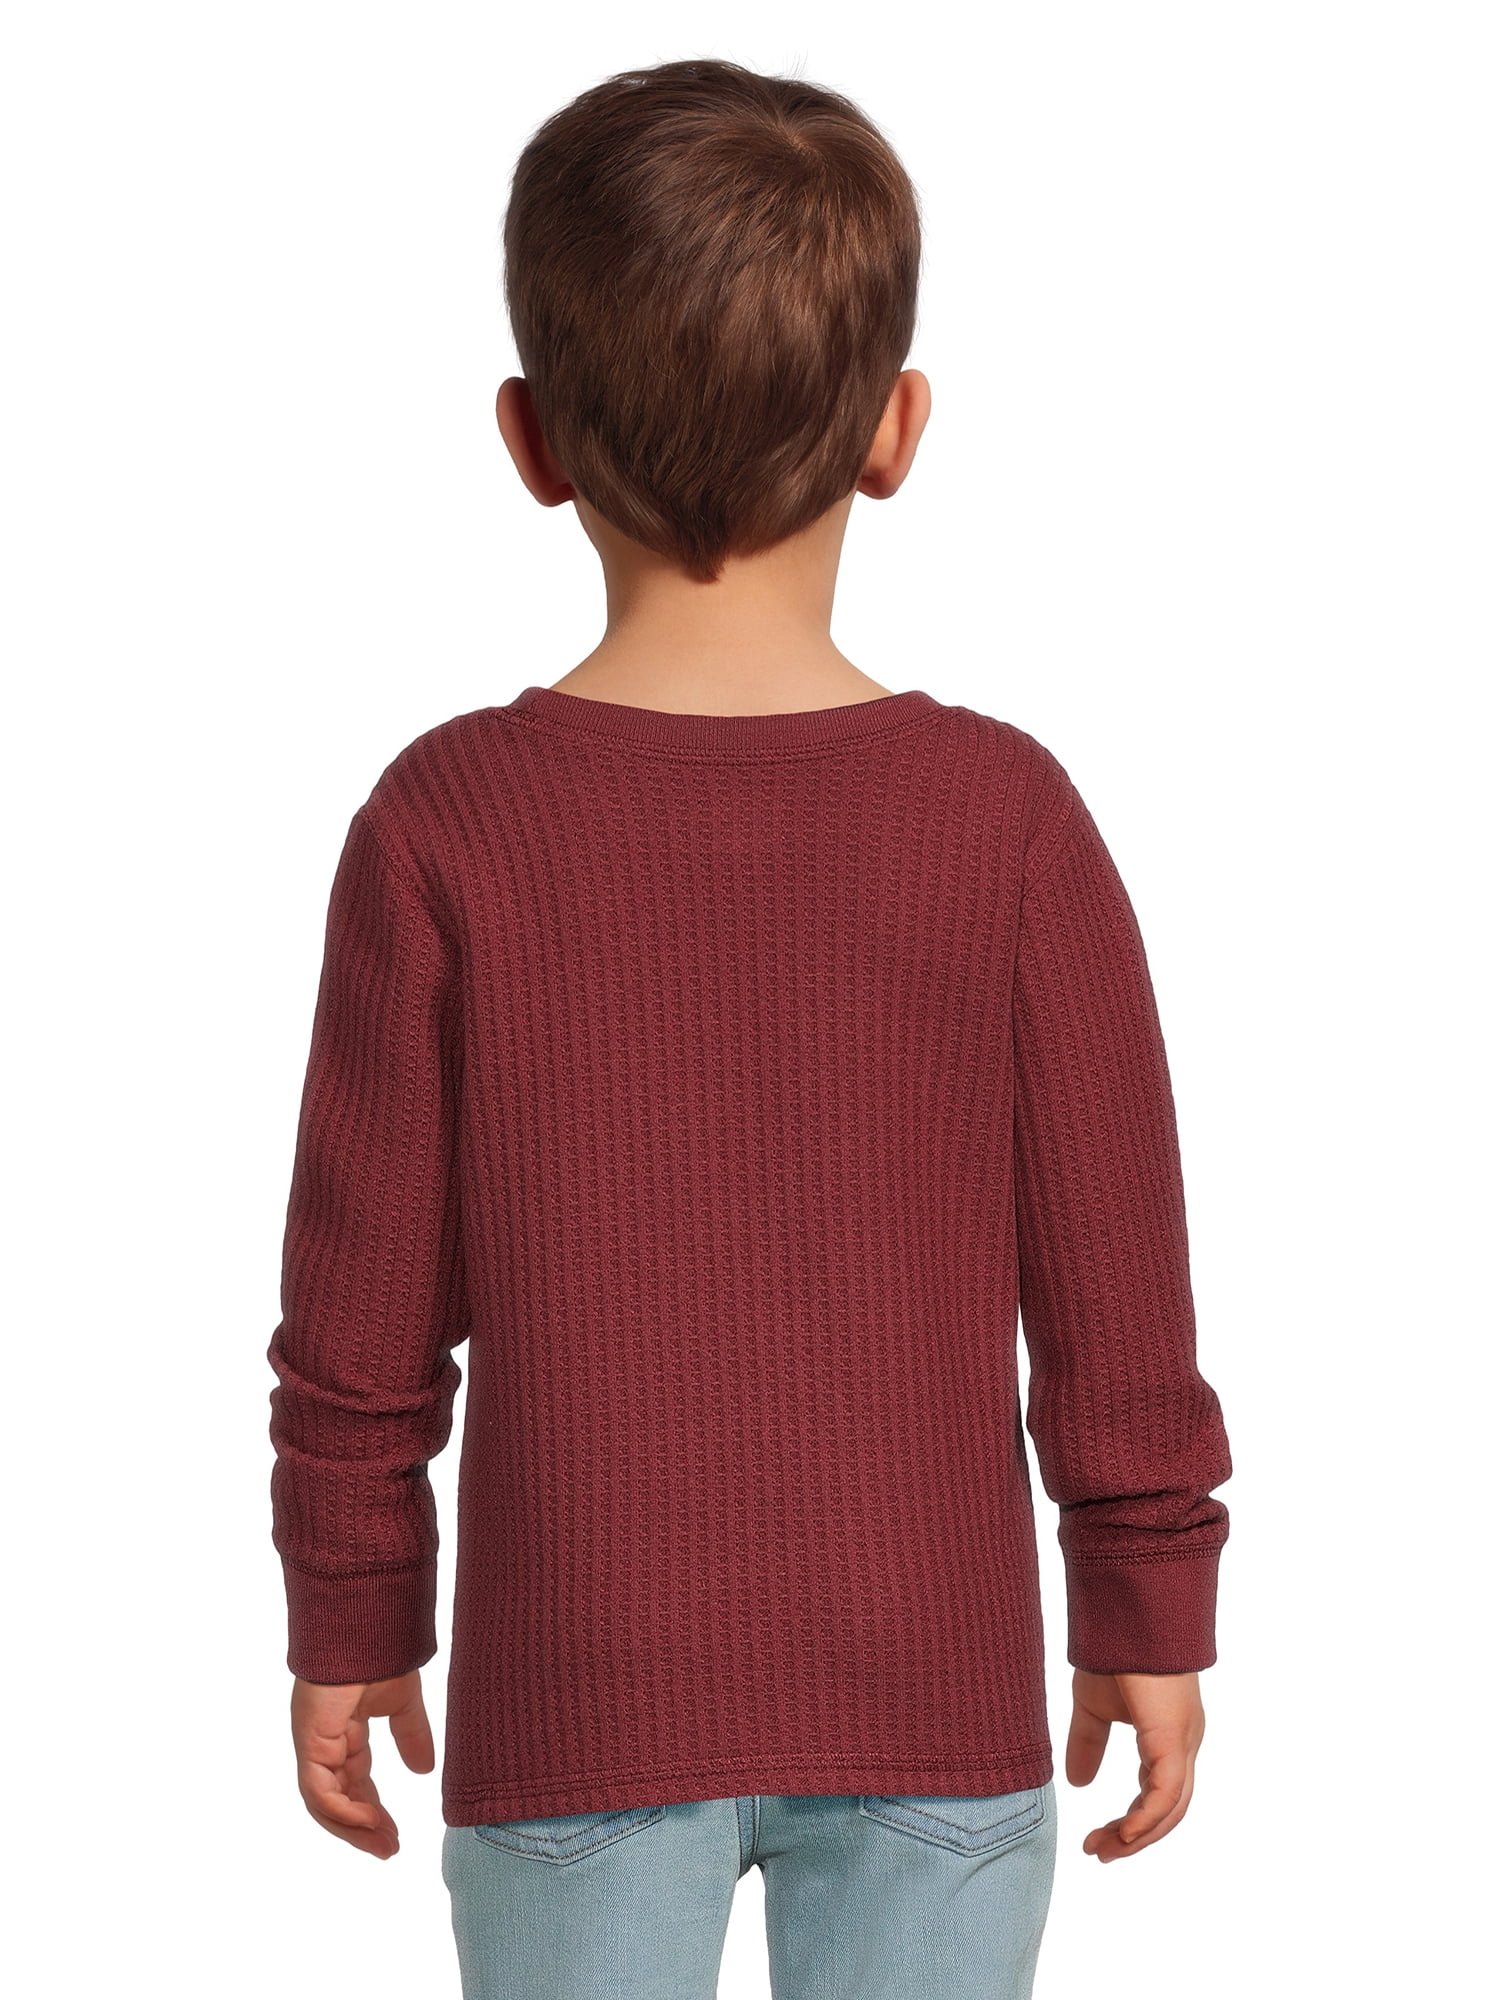 Garanimals Toddler Boy Long Sleeve Waffle Knit T-Shirt, Sizes 12M-5T